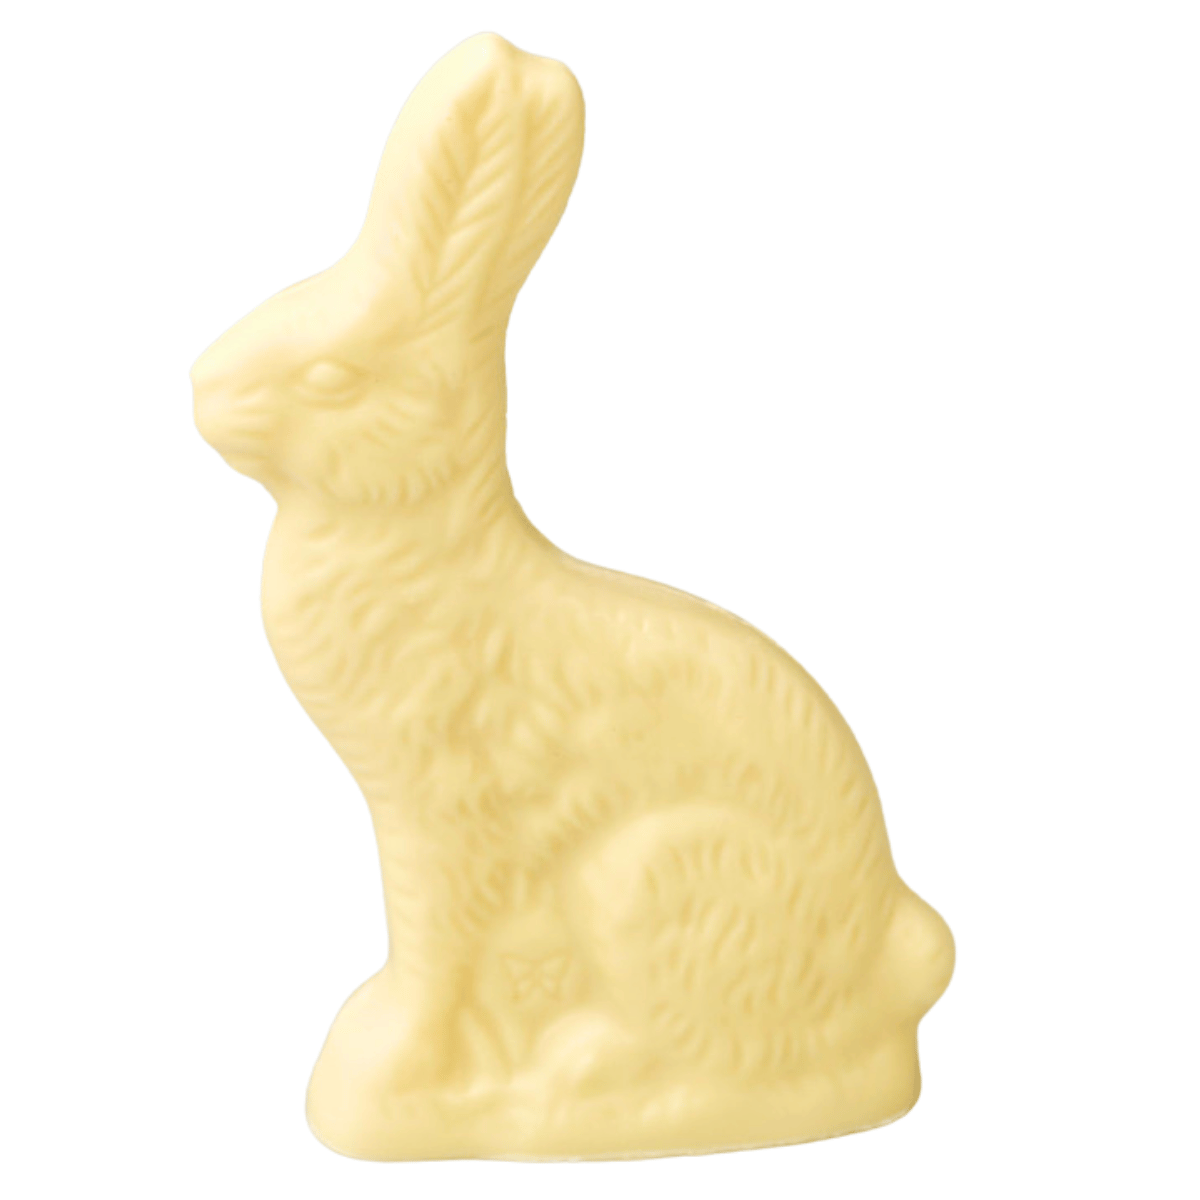 2.5 oz Solid White Chocolate Bunny